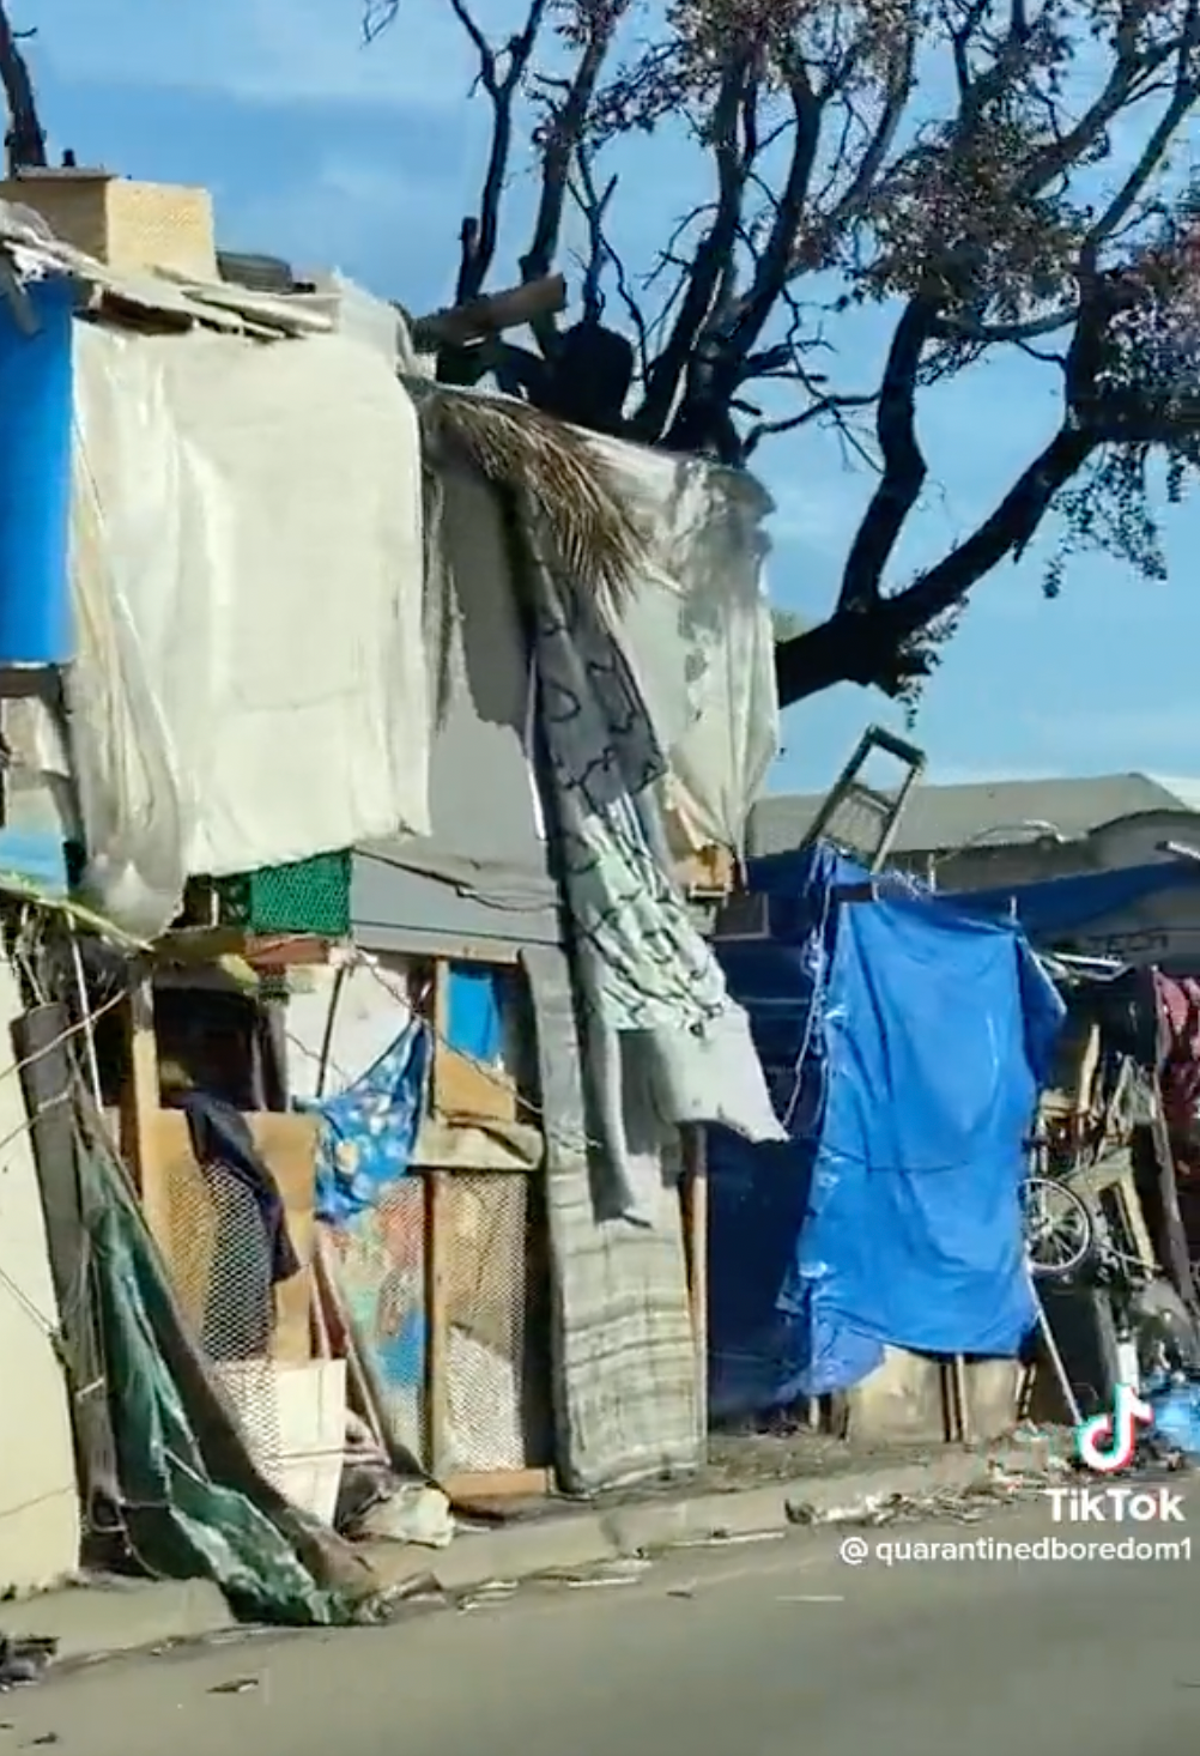 Susan Sarandon shares video of homeless crisis in California